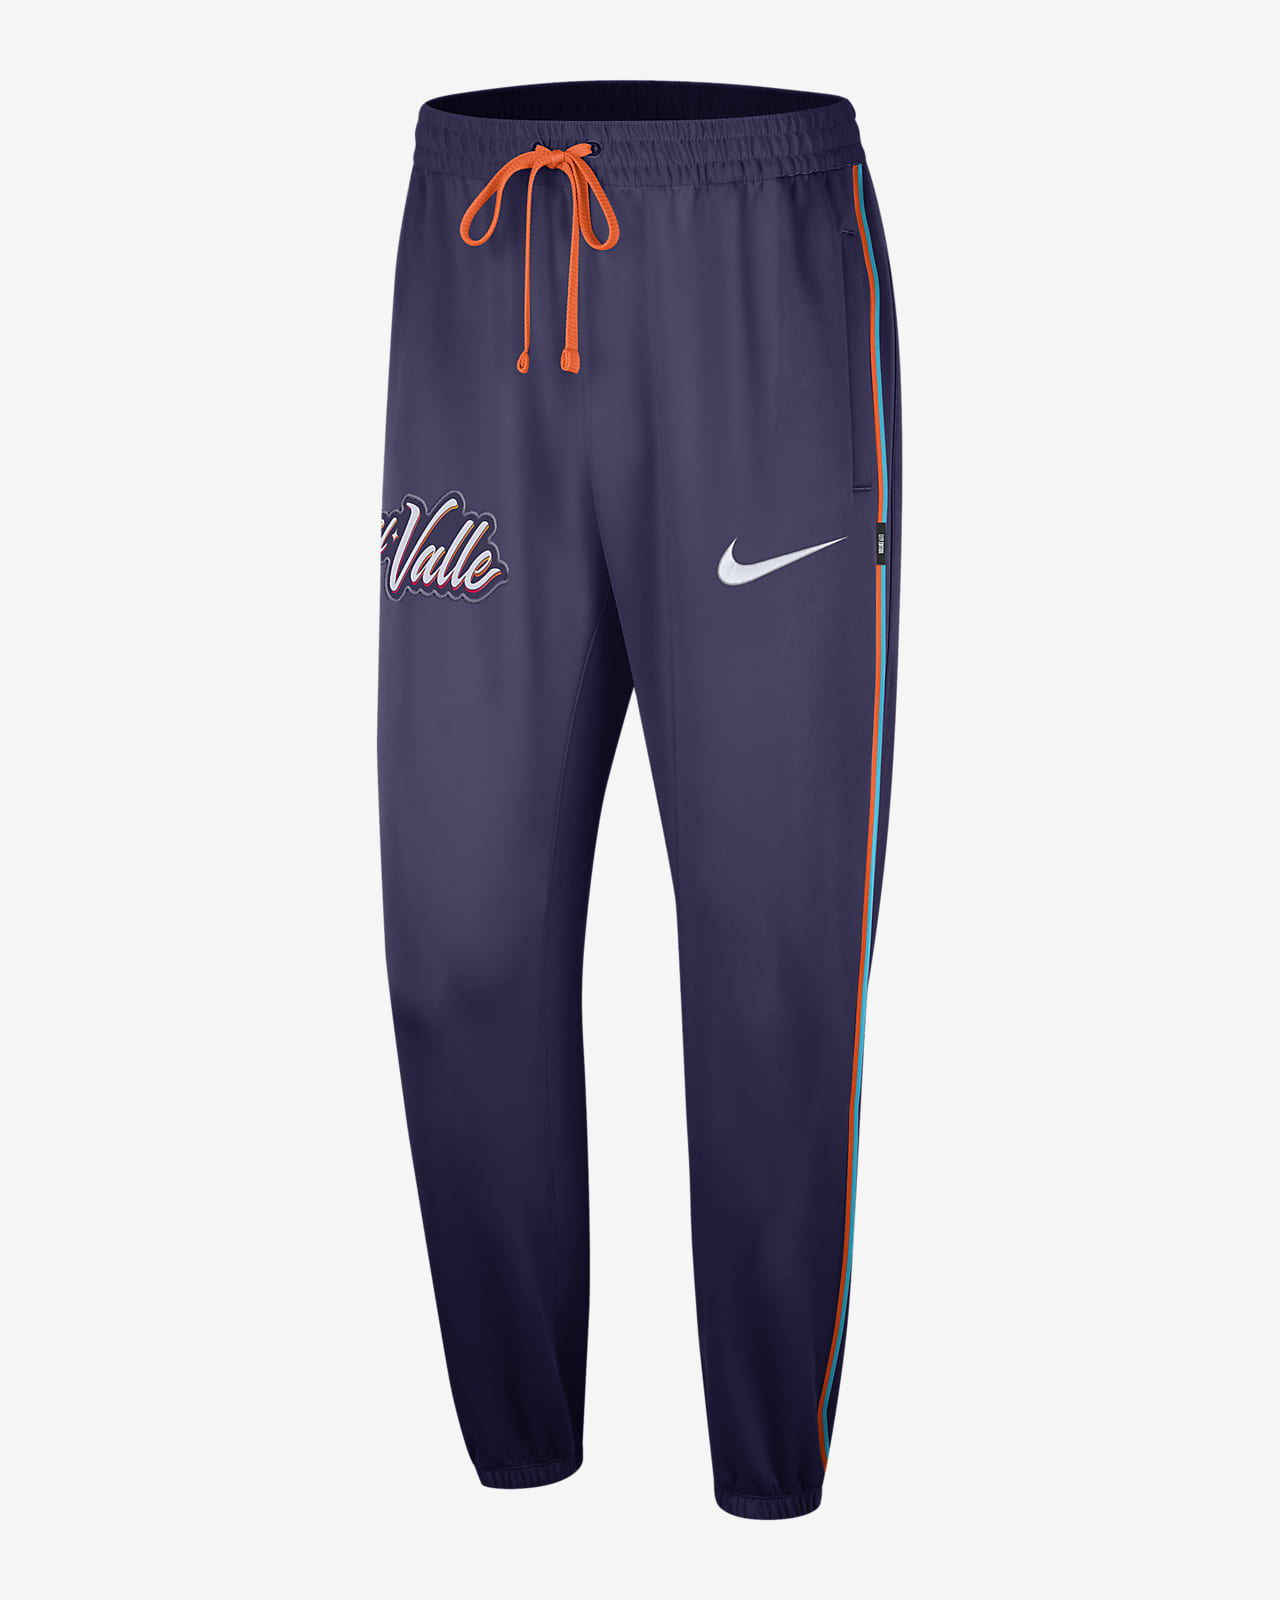 Phoenix Suns Showtime City Edition Men's Nike Dri-FIT NBA Trousers